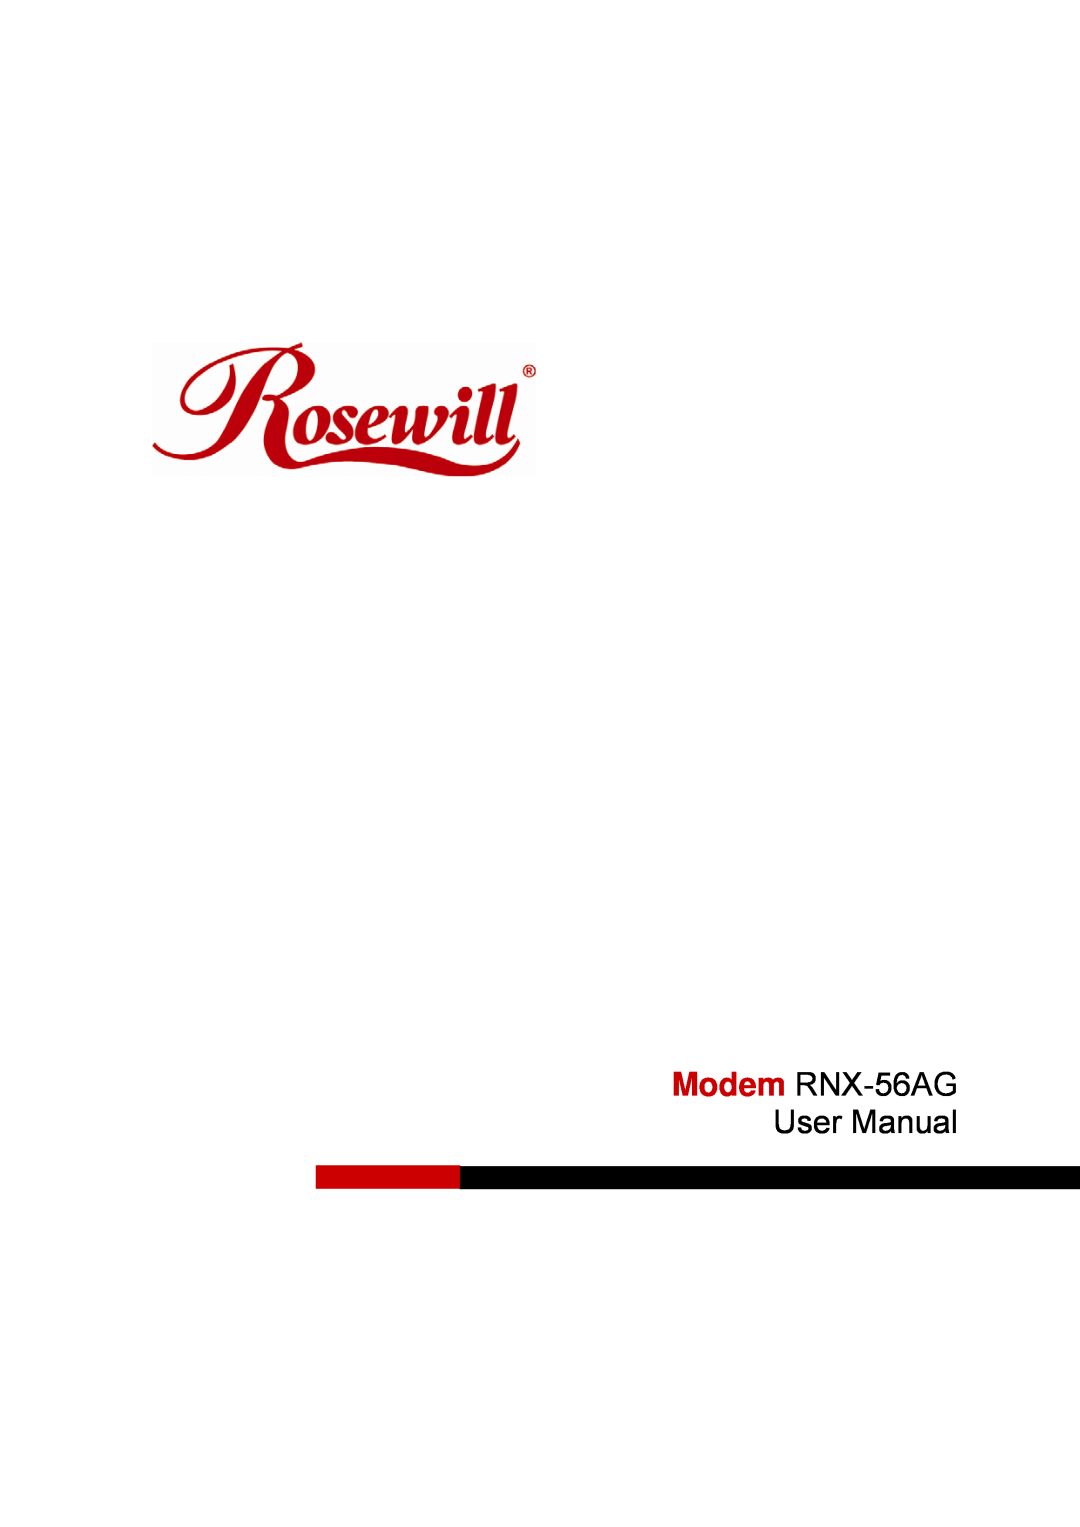 Rosewill user manual Modem RNX-56AG User Manual 